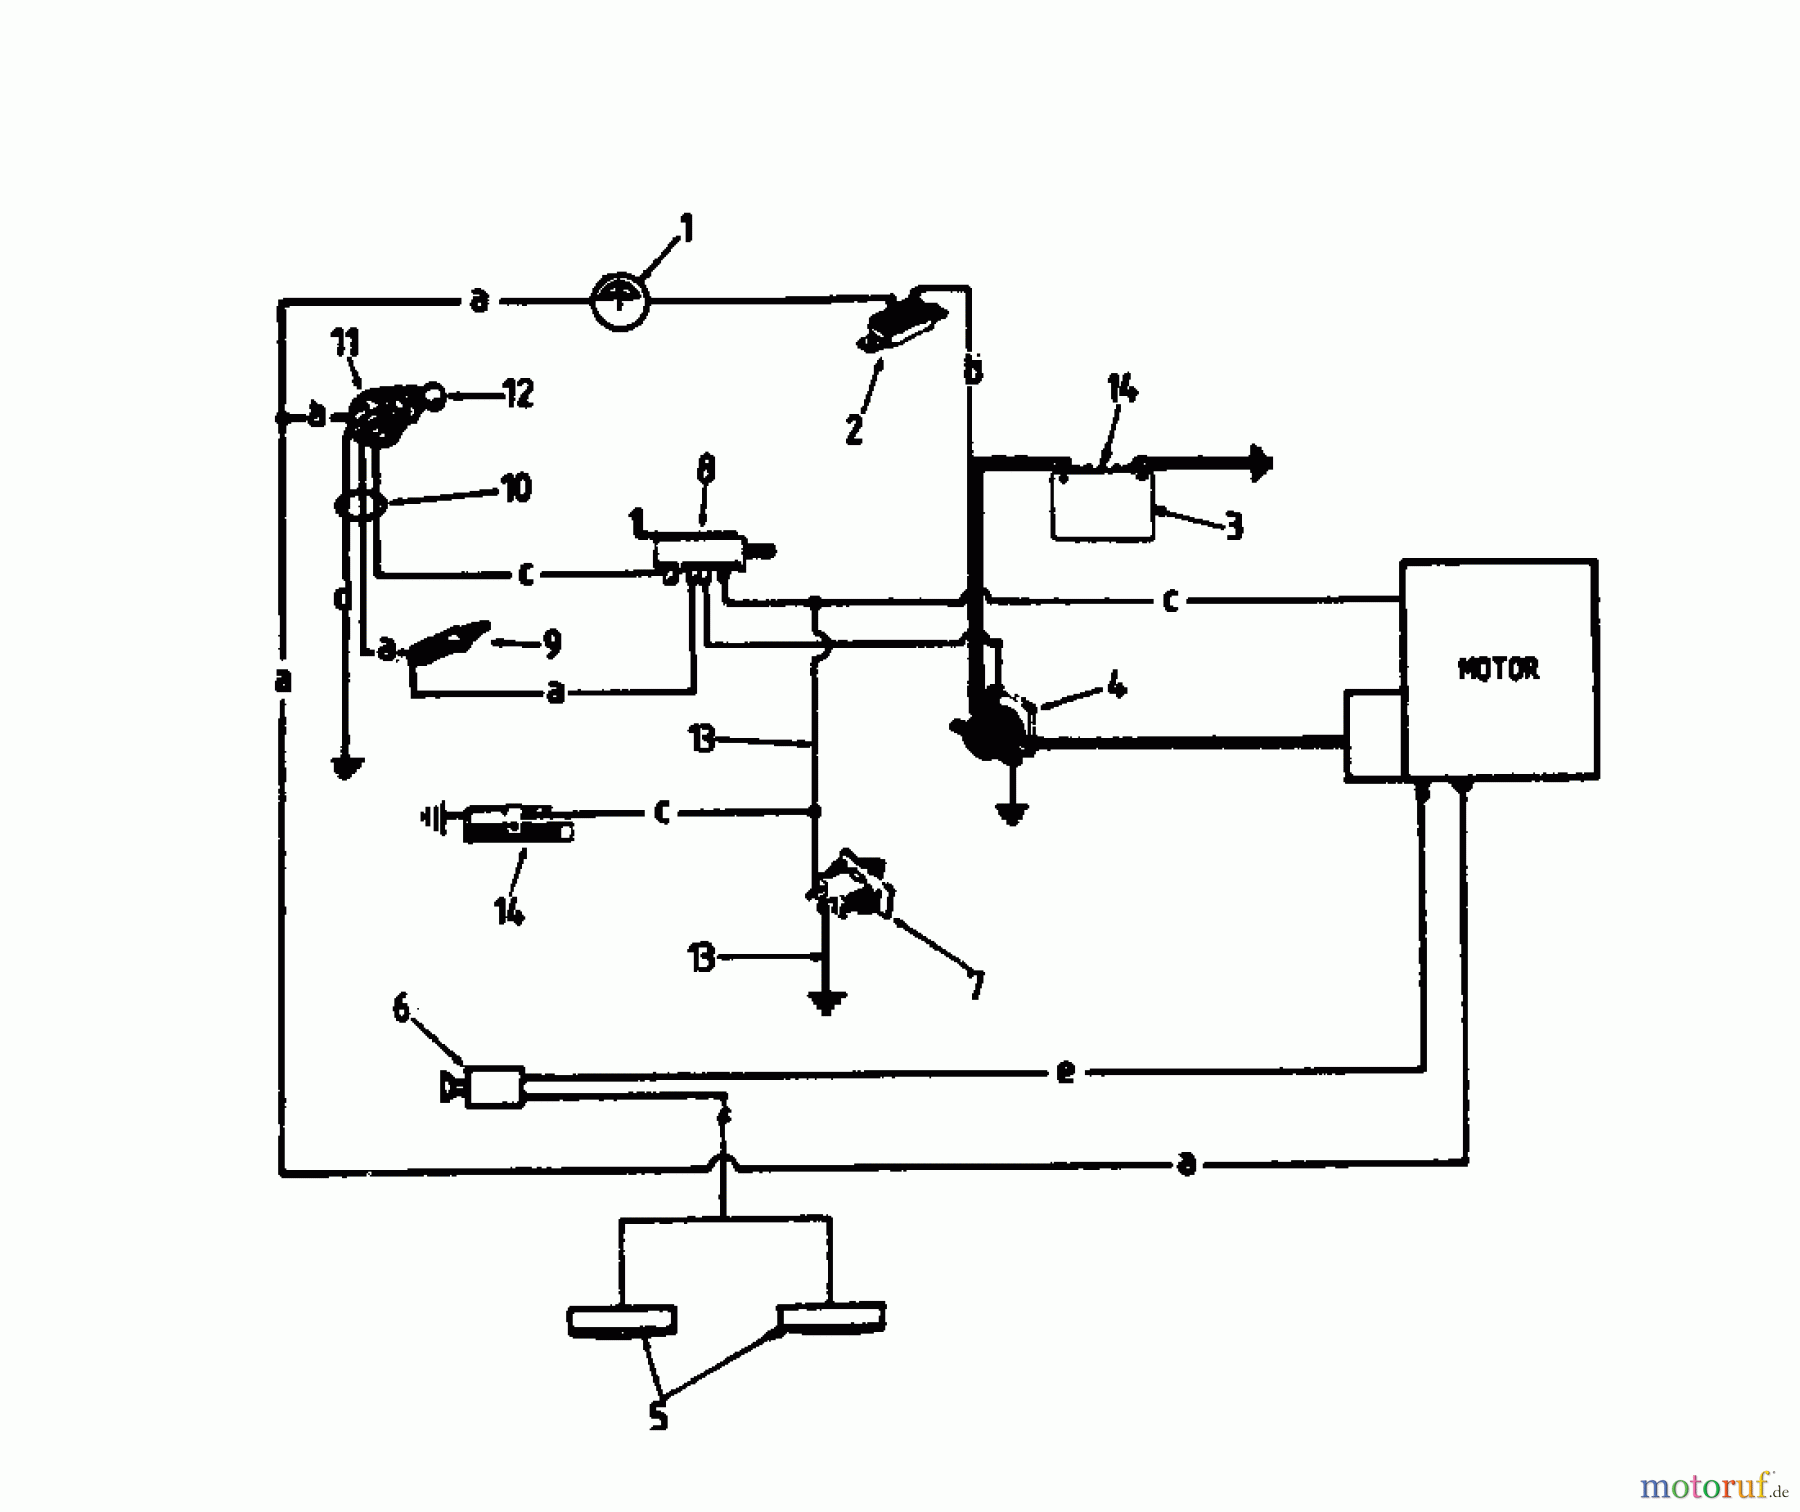  Gutbrod Lawn tractors 810 HEBS 02651.03  (1988) Wiring diagram